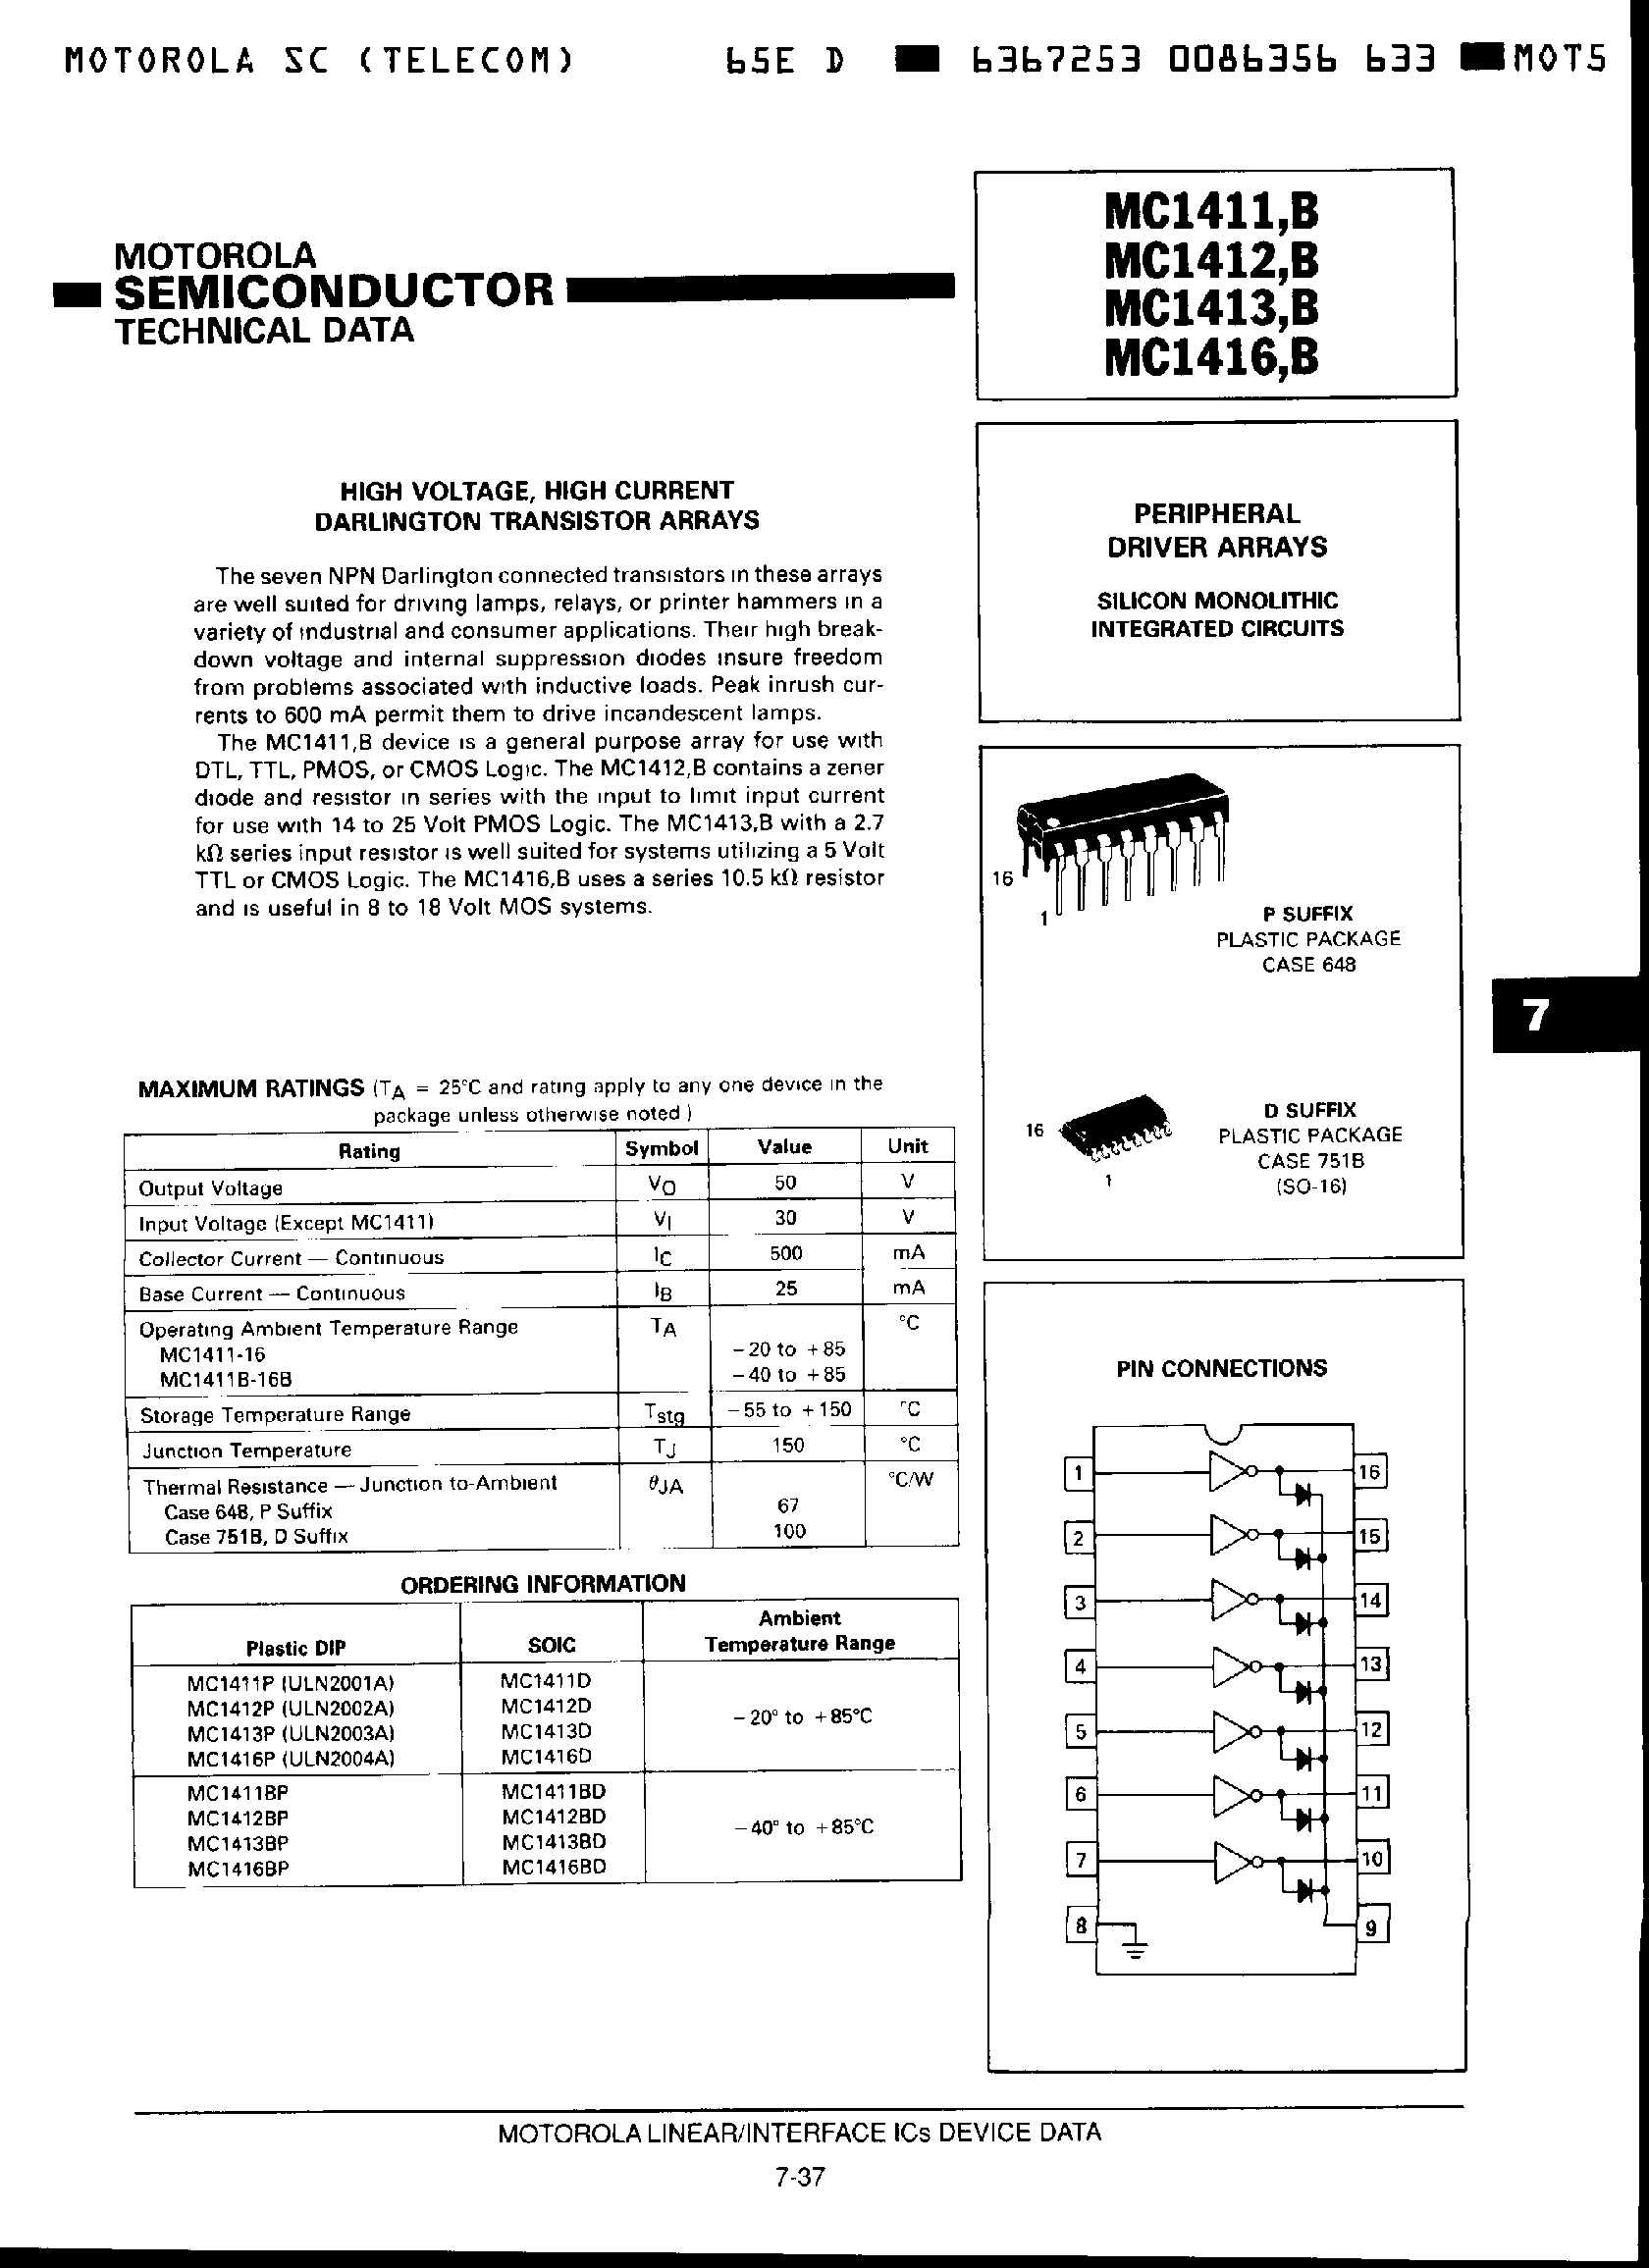 Datasheet MC1411 - PERIPHERAL DRIVER ARRAYS page 1